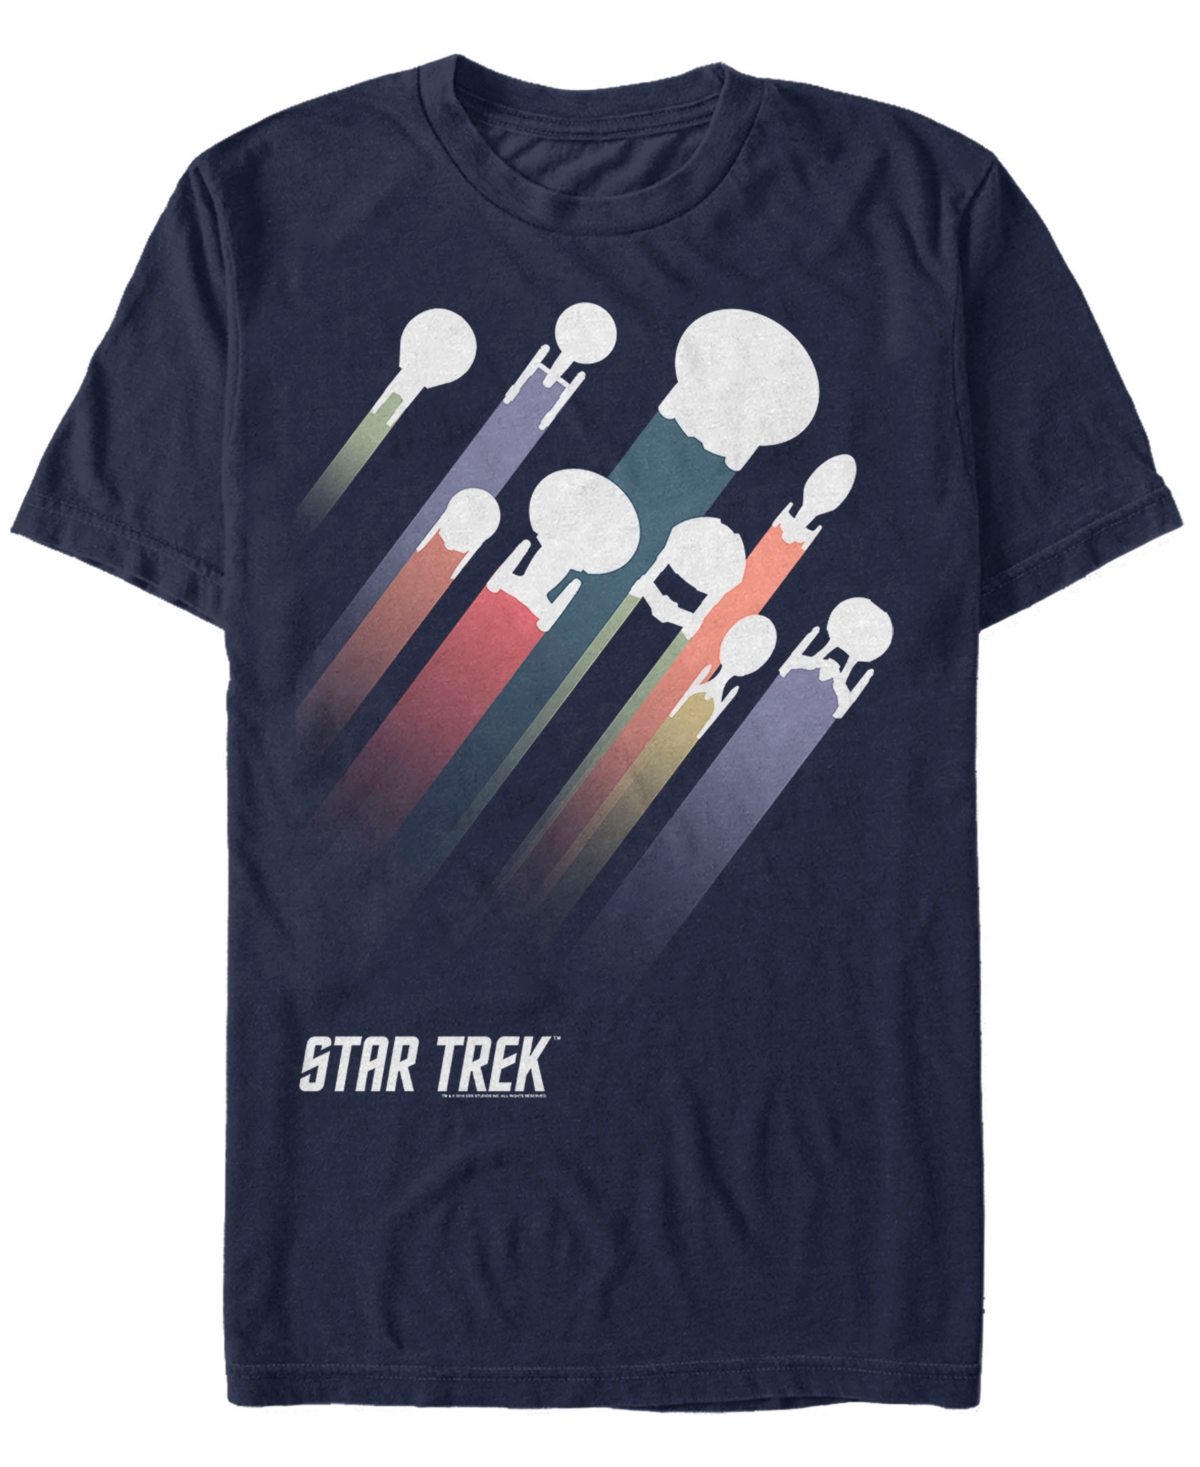 Star Trek Men's The Original Series Retro Ship Streaks Short Sleeve T-Shirt - Navy